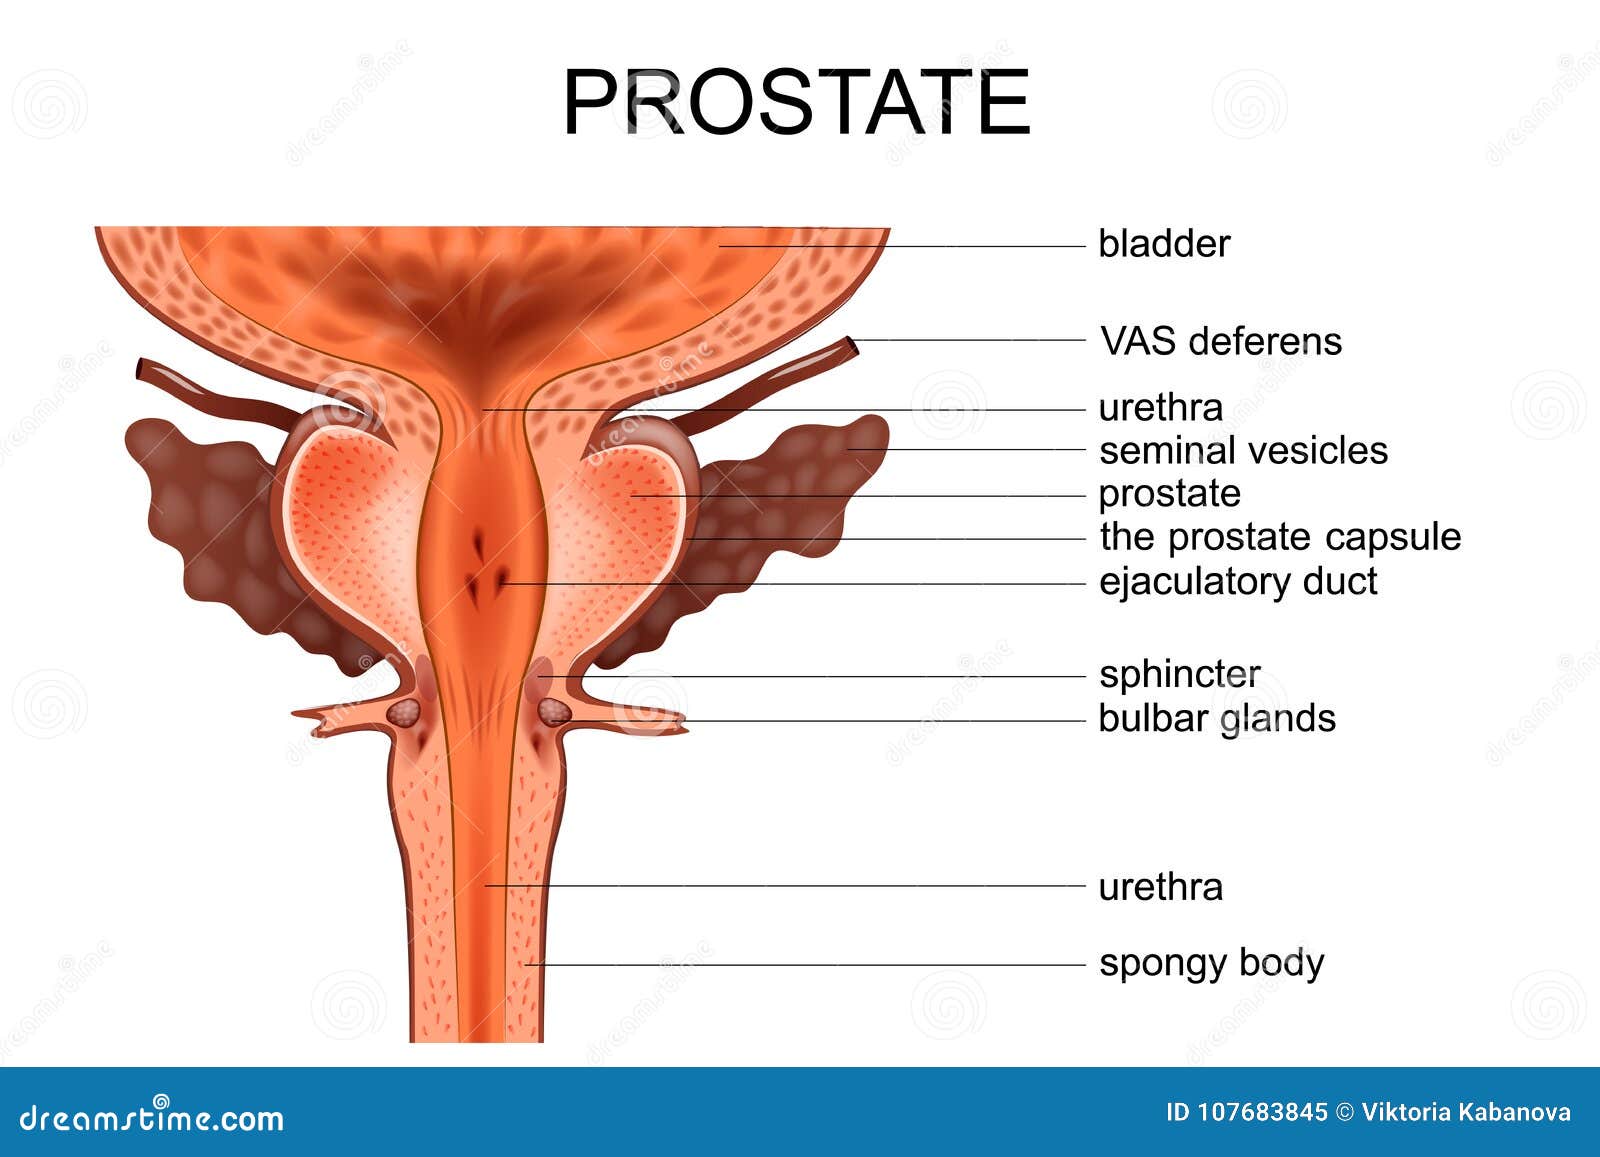 Cancer de prostata resumo - Cancer de prostata contagia a la mujer, Ovarian cancer zhongwen